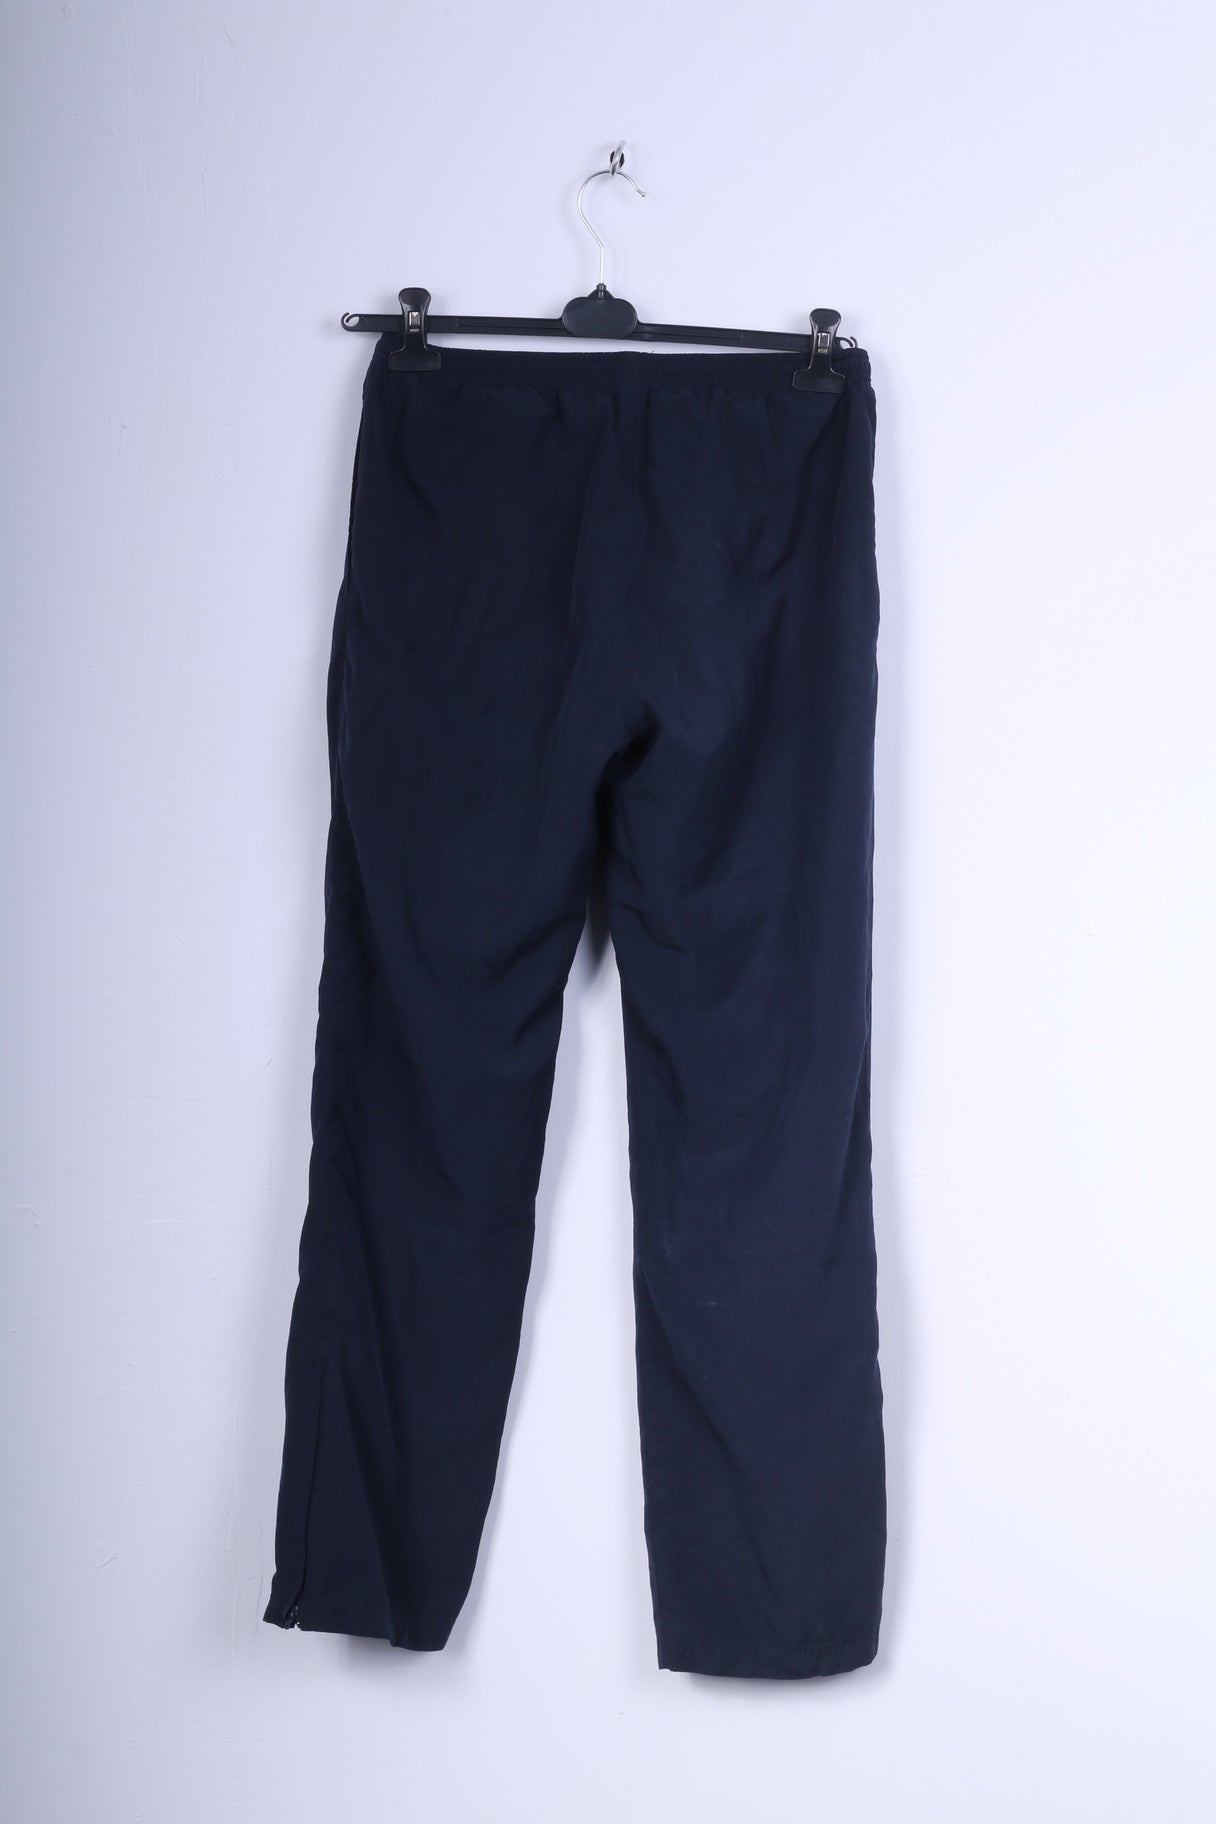 Reebok Womens S Trousers Navy Sport Sweatpants Gym Pants